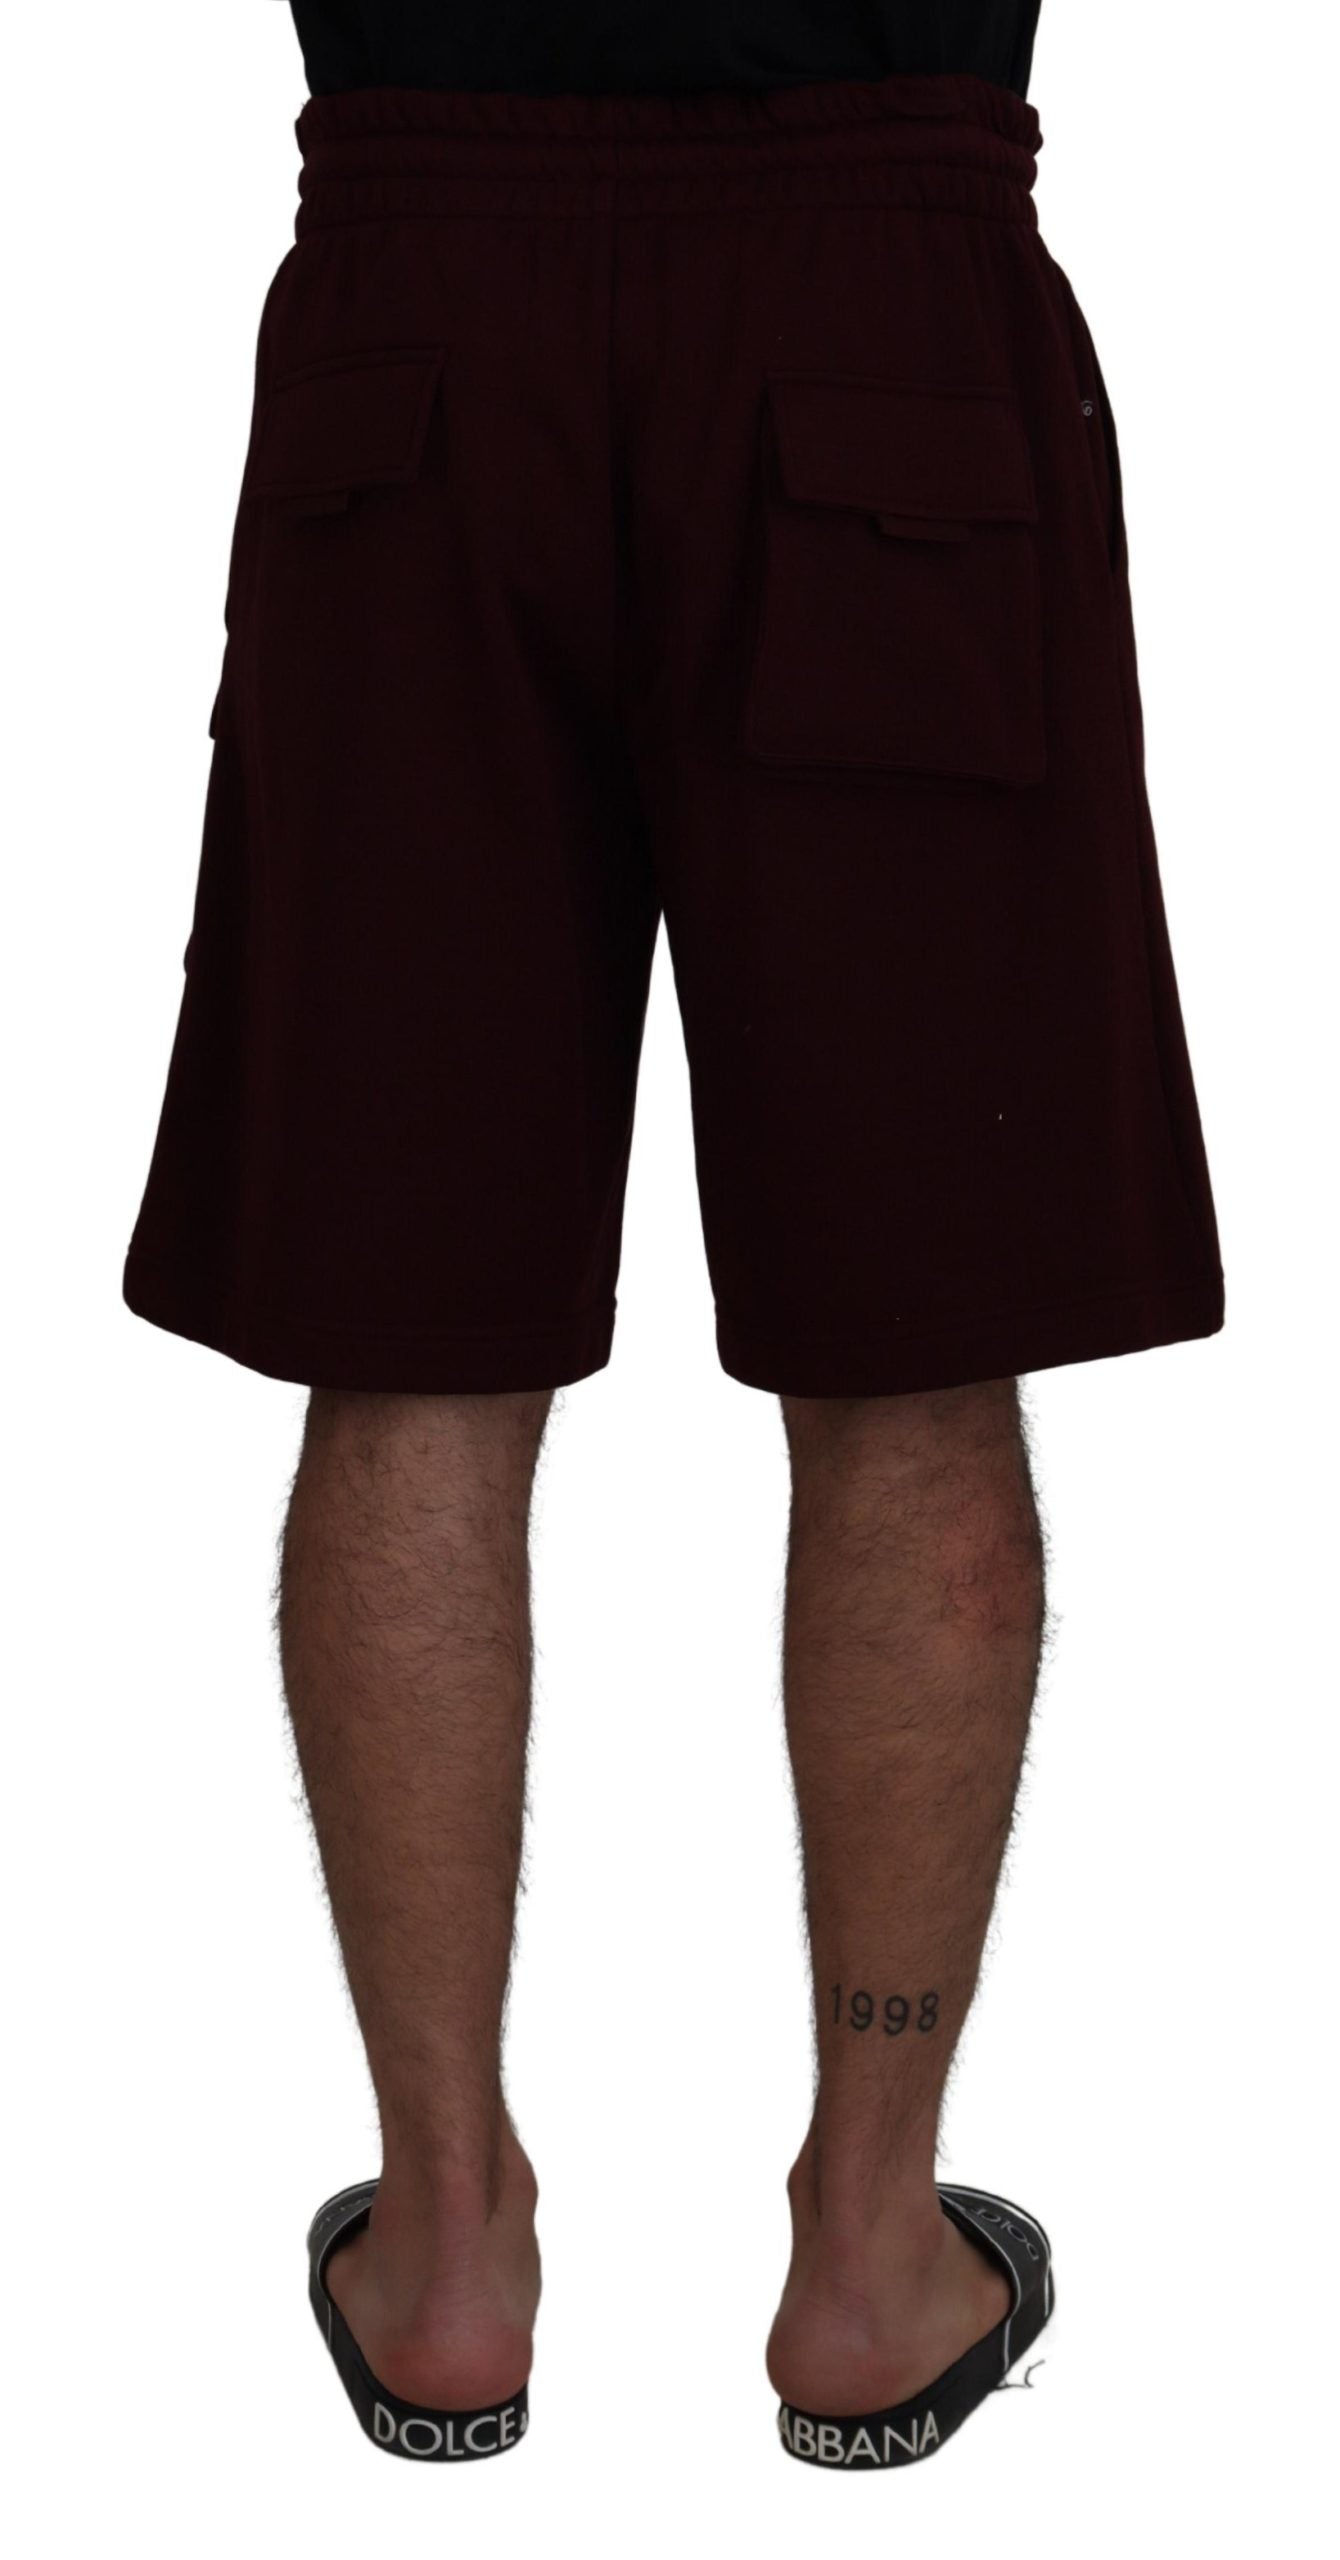 Elegant Maroon Tailored Shorts